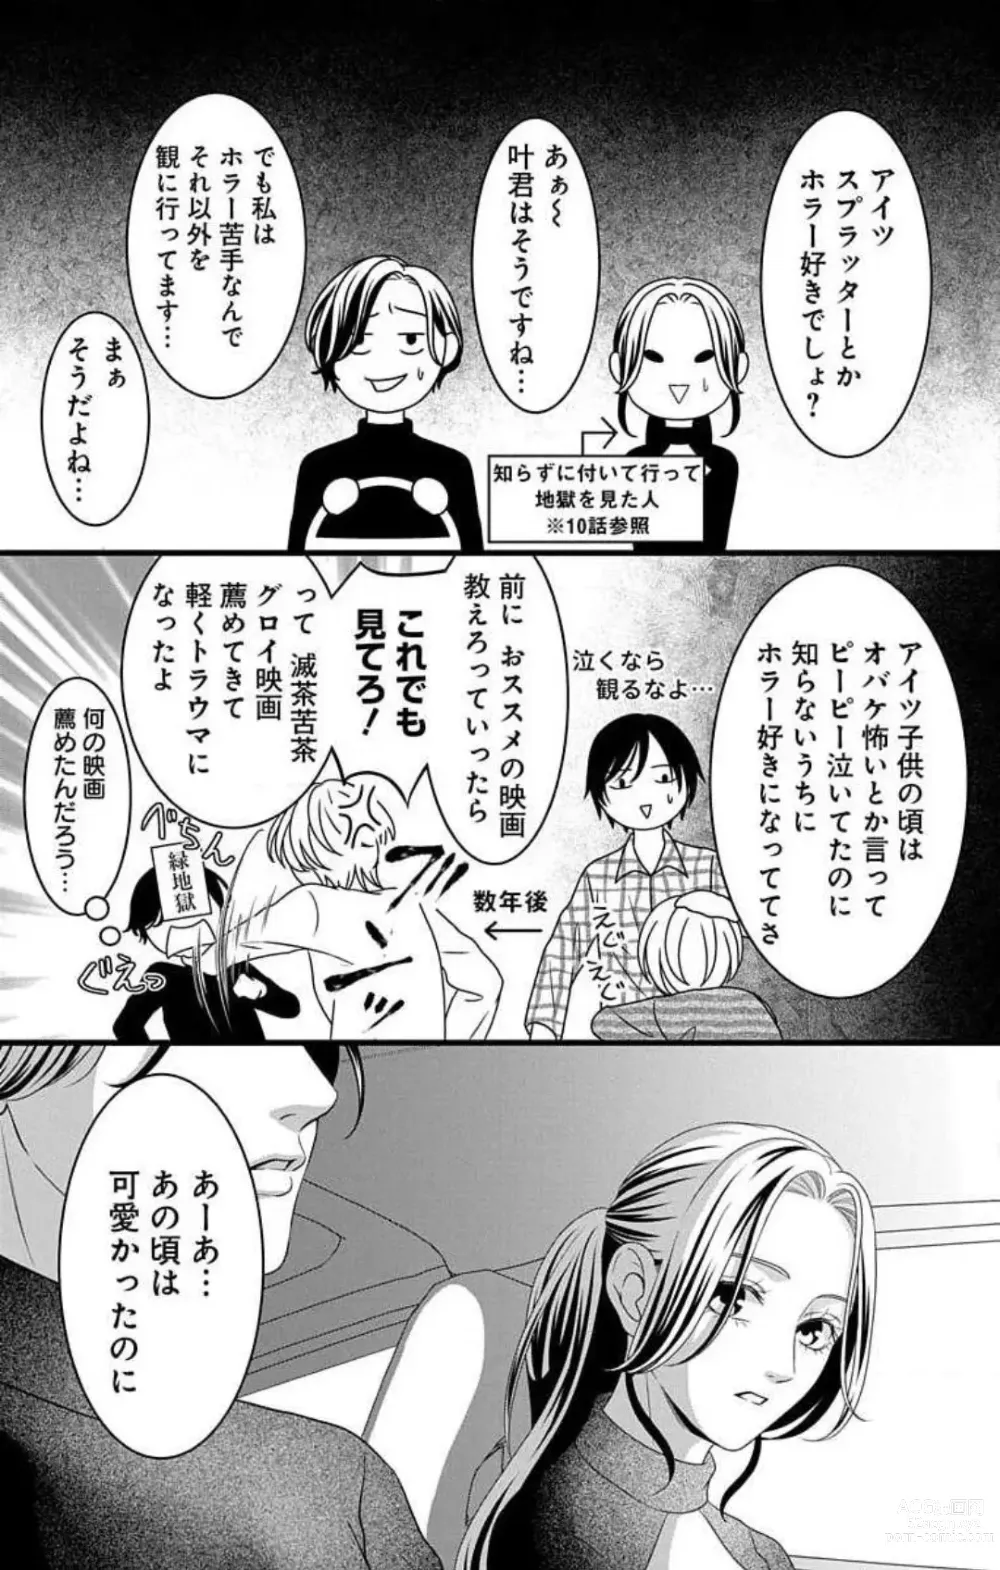 Page 264 of manga Mousou Shoujo 21-27